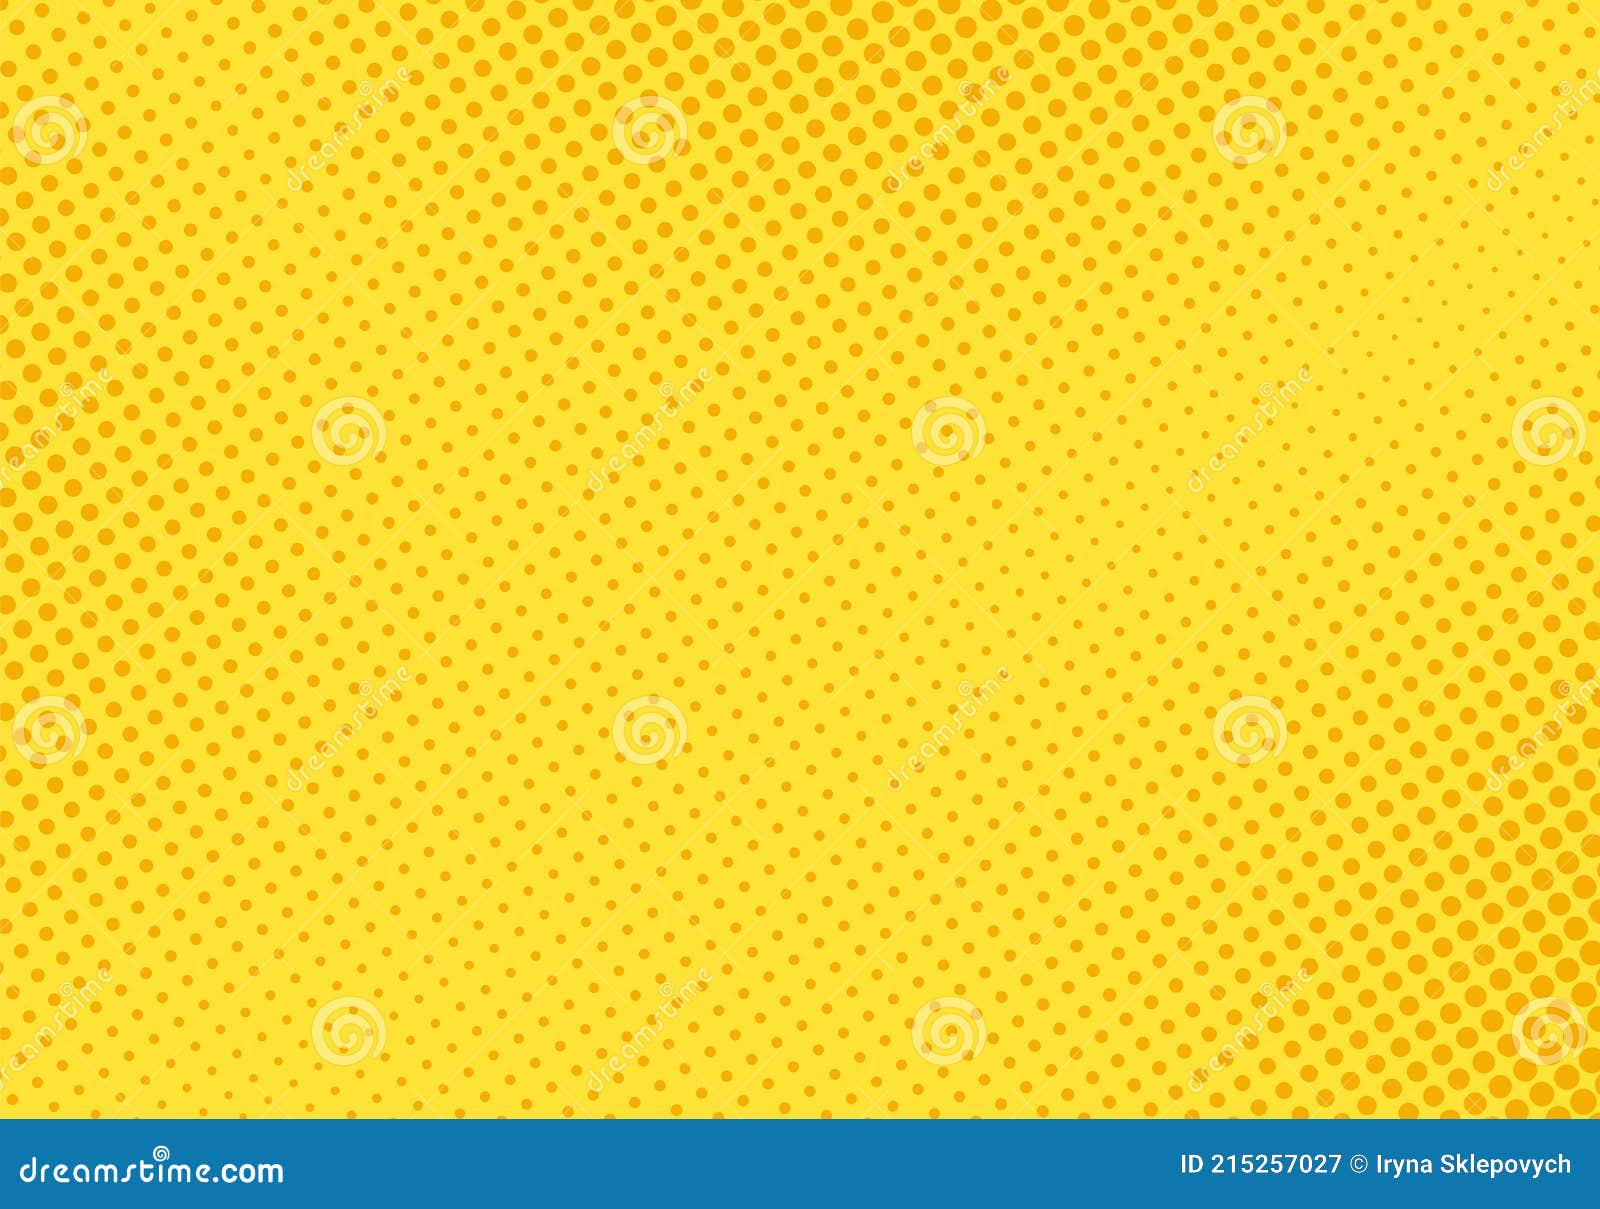 halftone pop art pattern. comic yellow texture.  